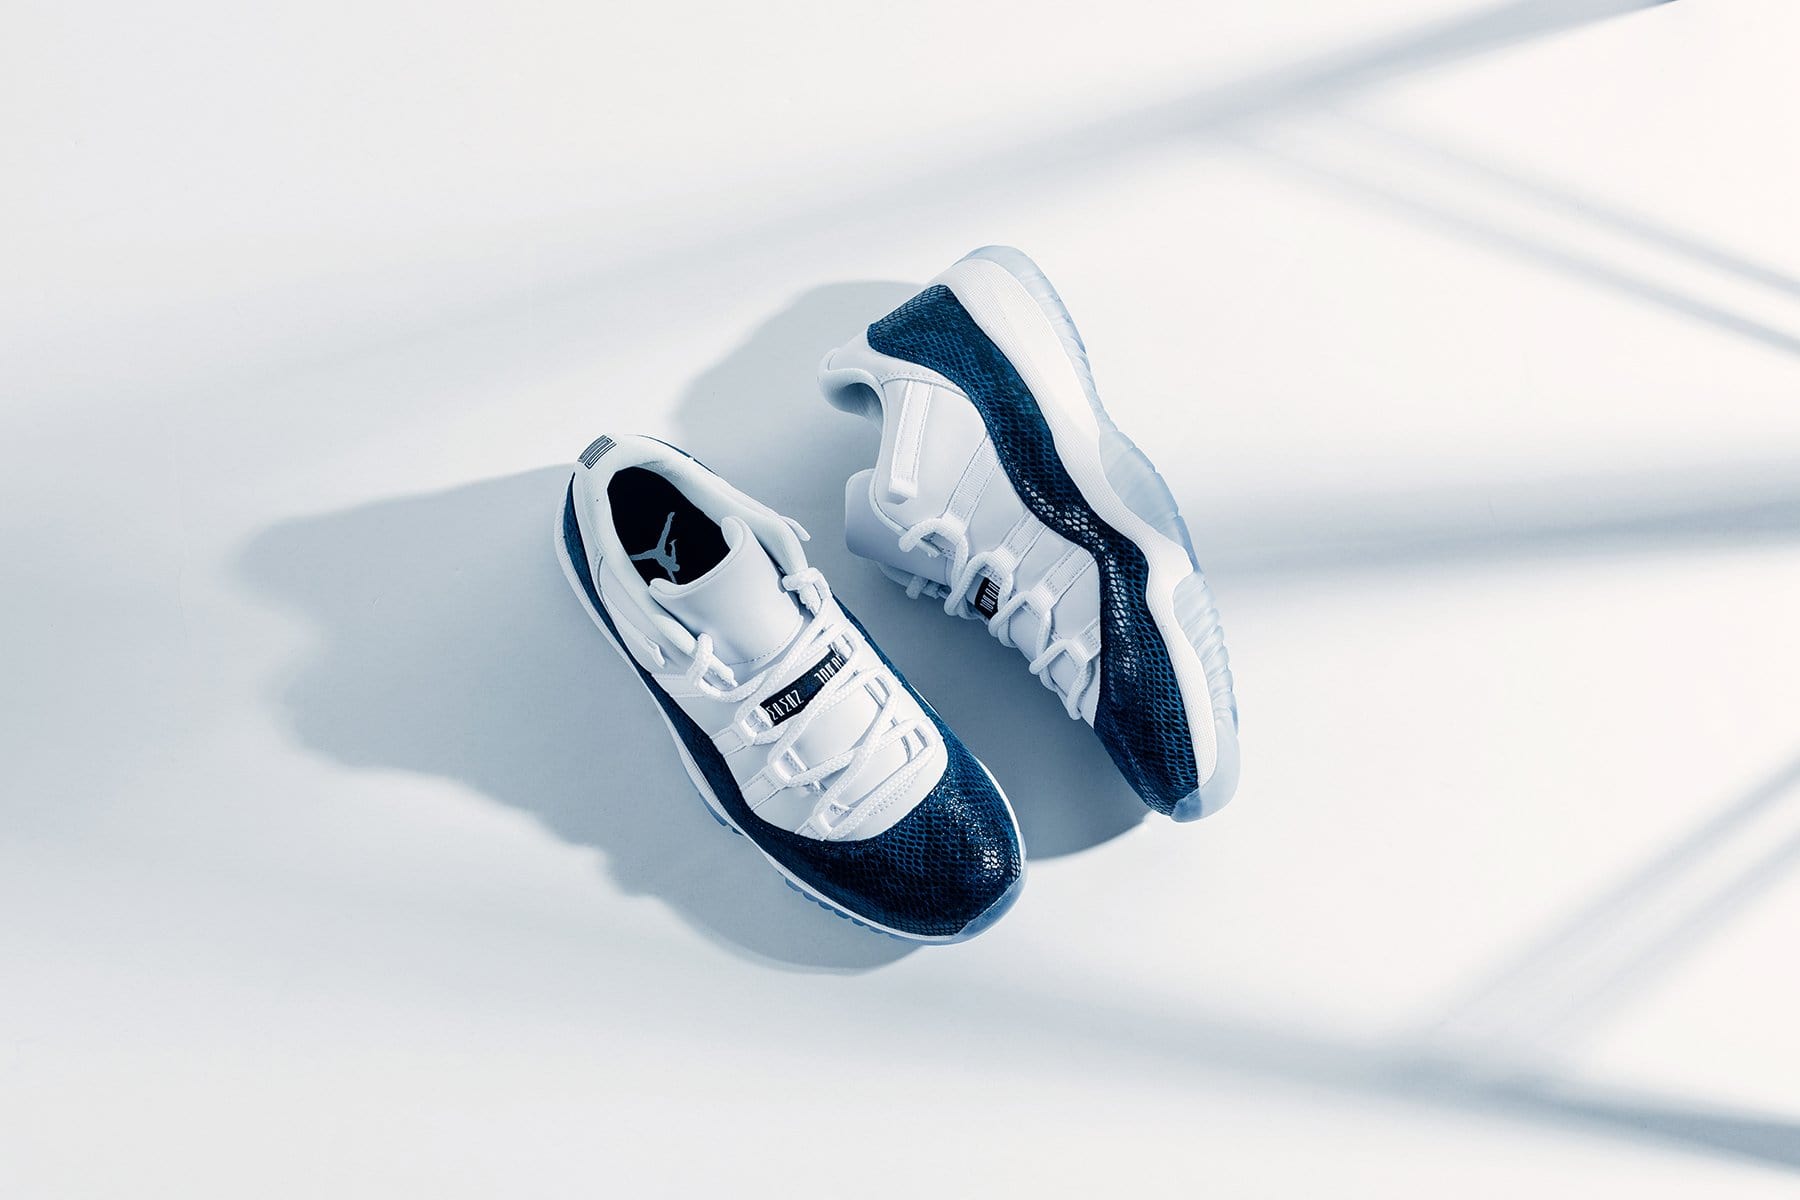 Air Jordan 11 Retro Low LE White/Black/Navy Coming Soon – Feature